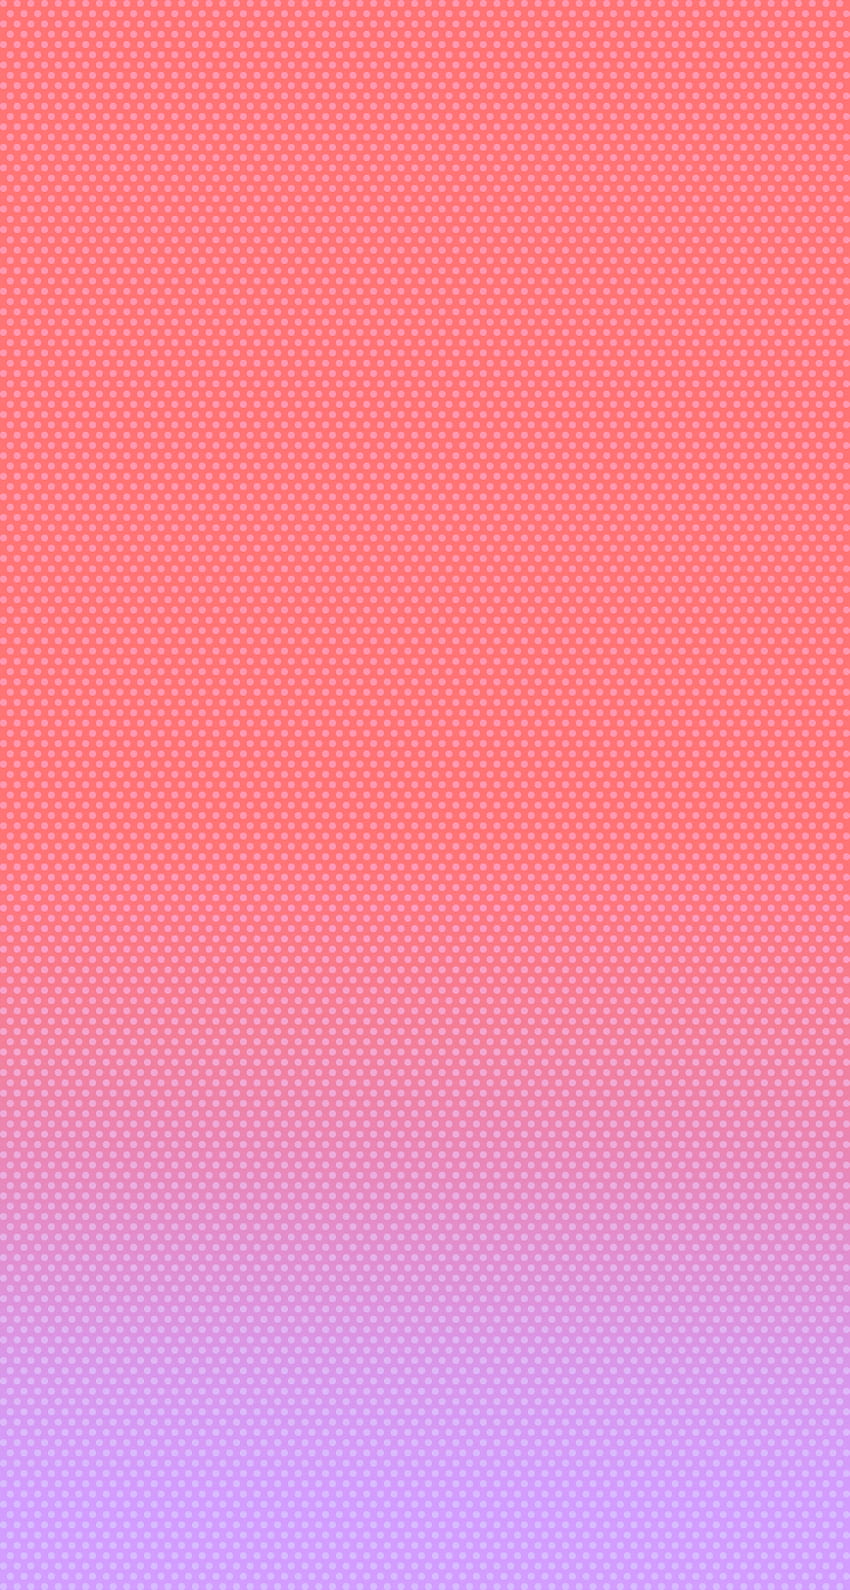 iOS 7 baru sekarang, Pink Dynamic wallpaper ponsel HD